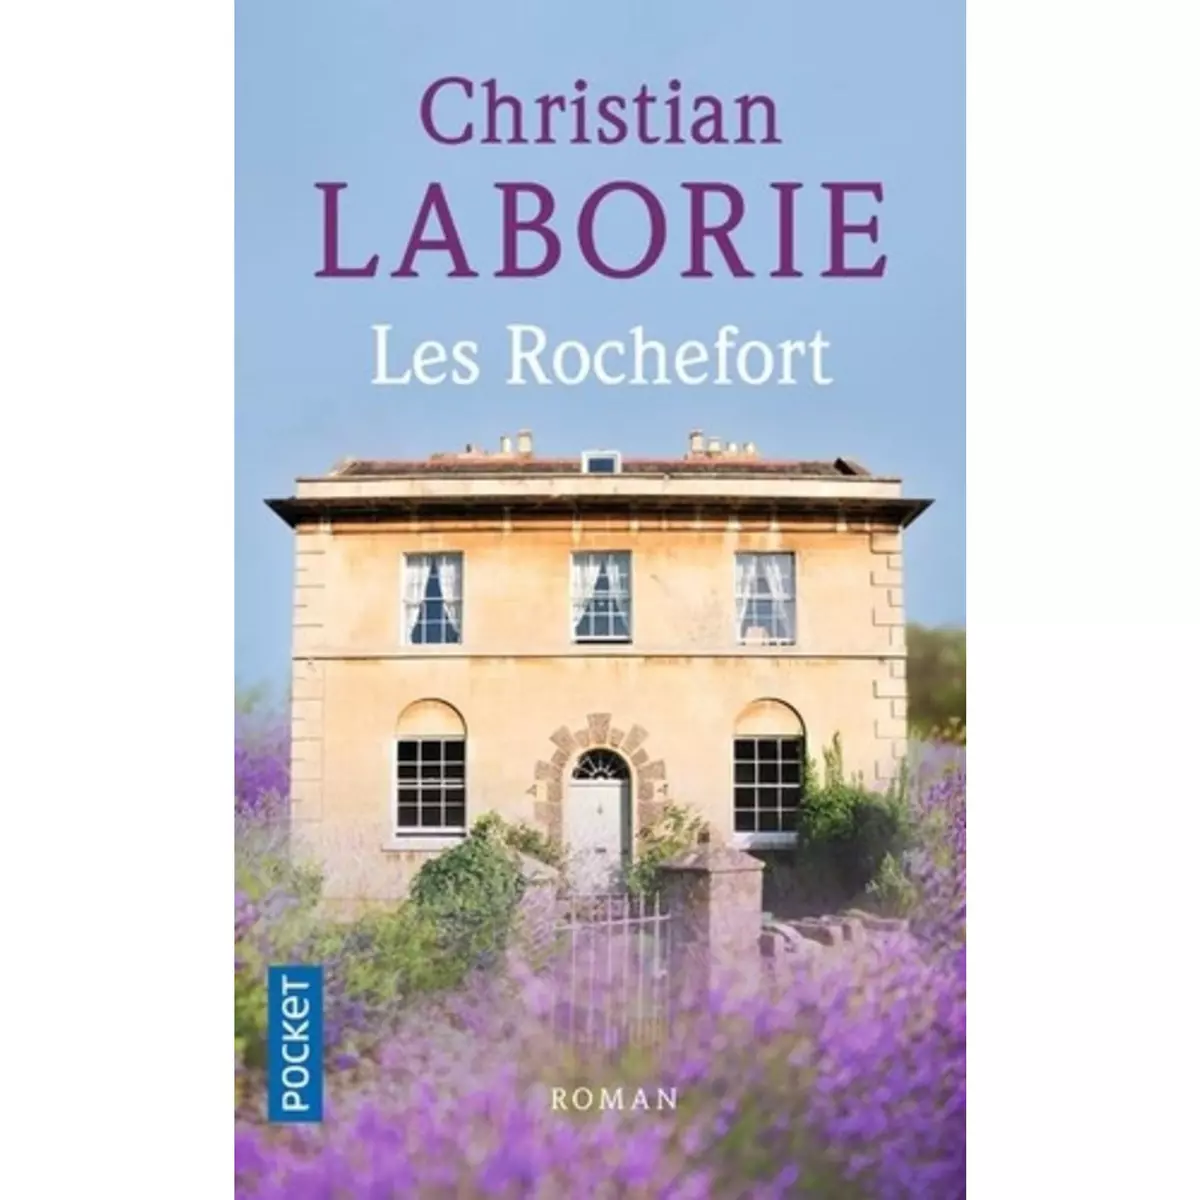  LES ROCHEFORT, Laborie Christian